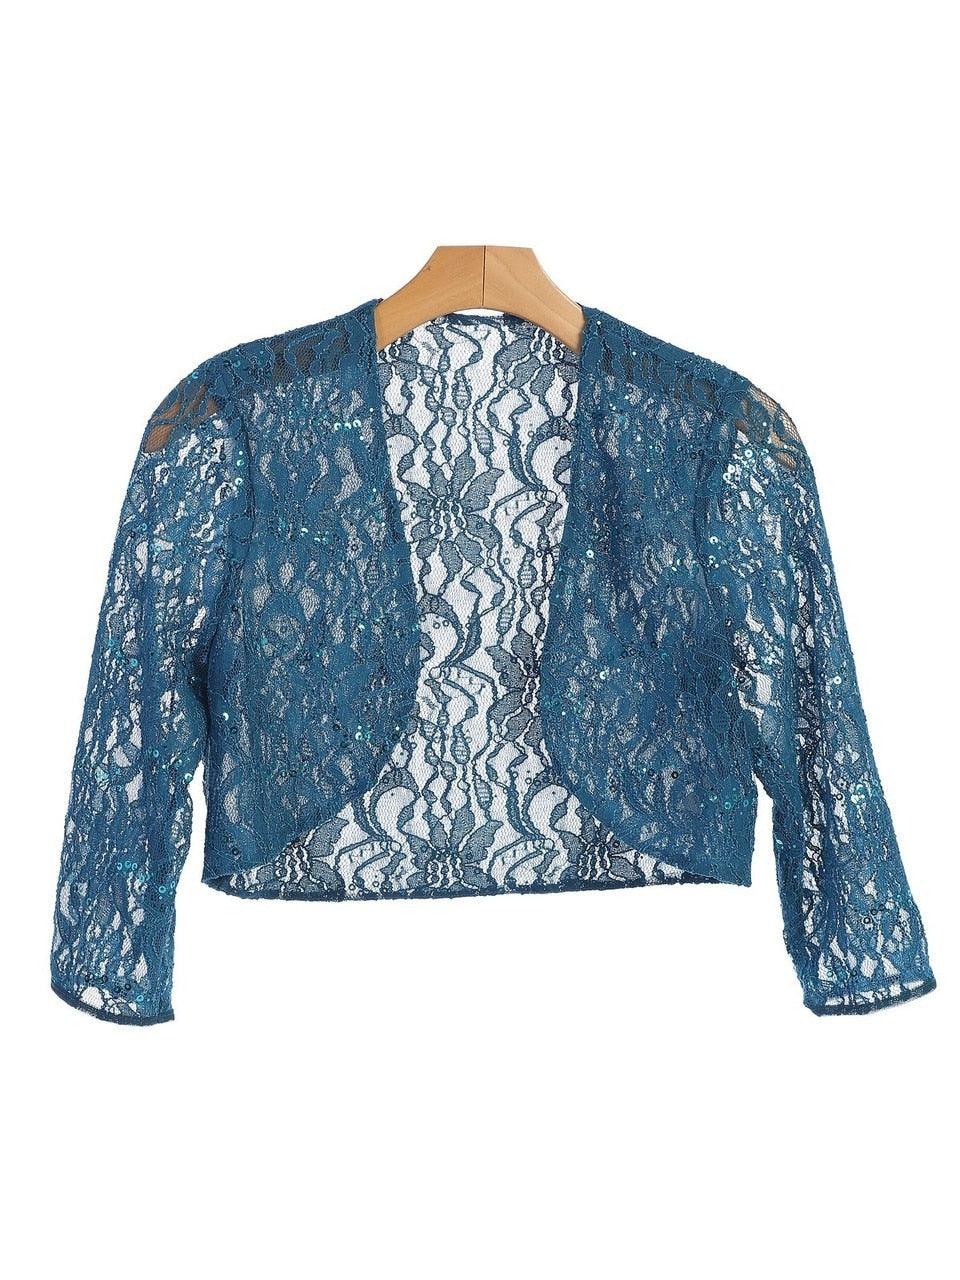 Formal Evening Lace Bolero Jacket - The Dress Outlet Eva Fashion